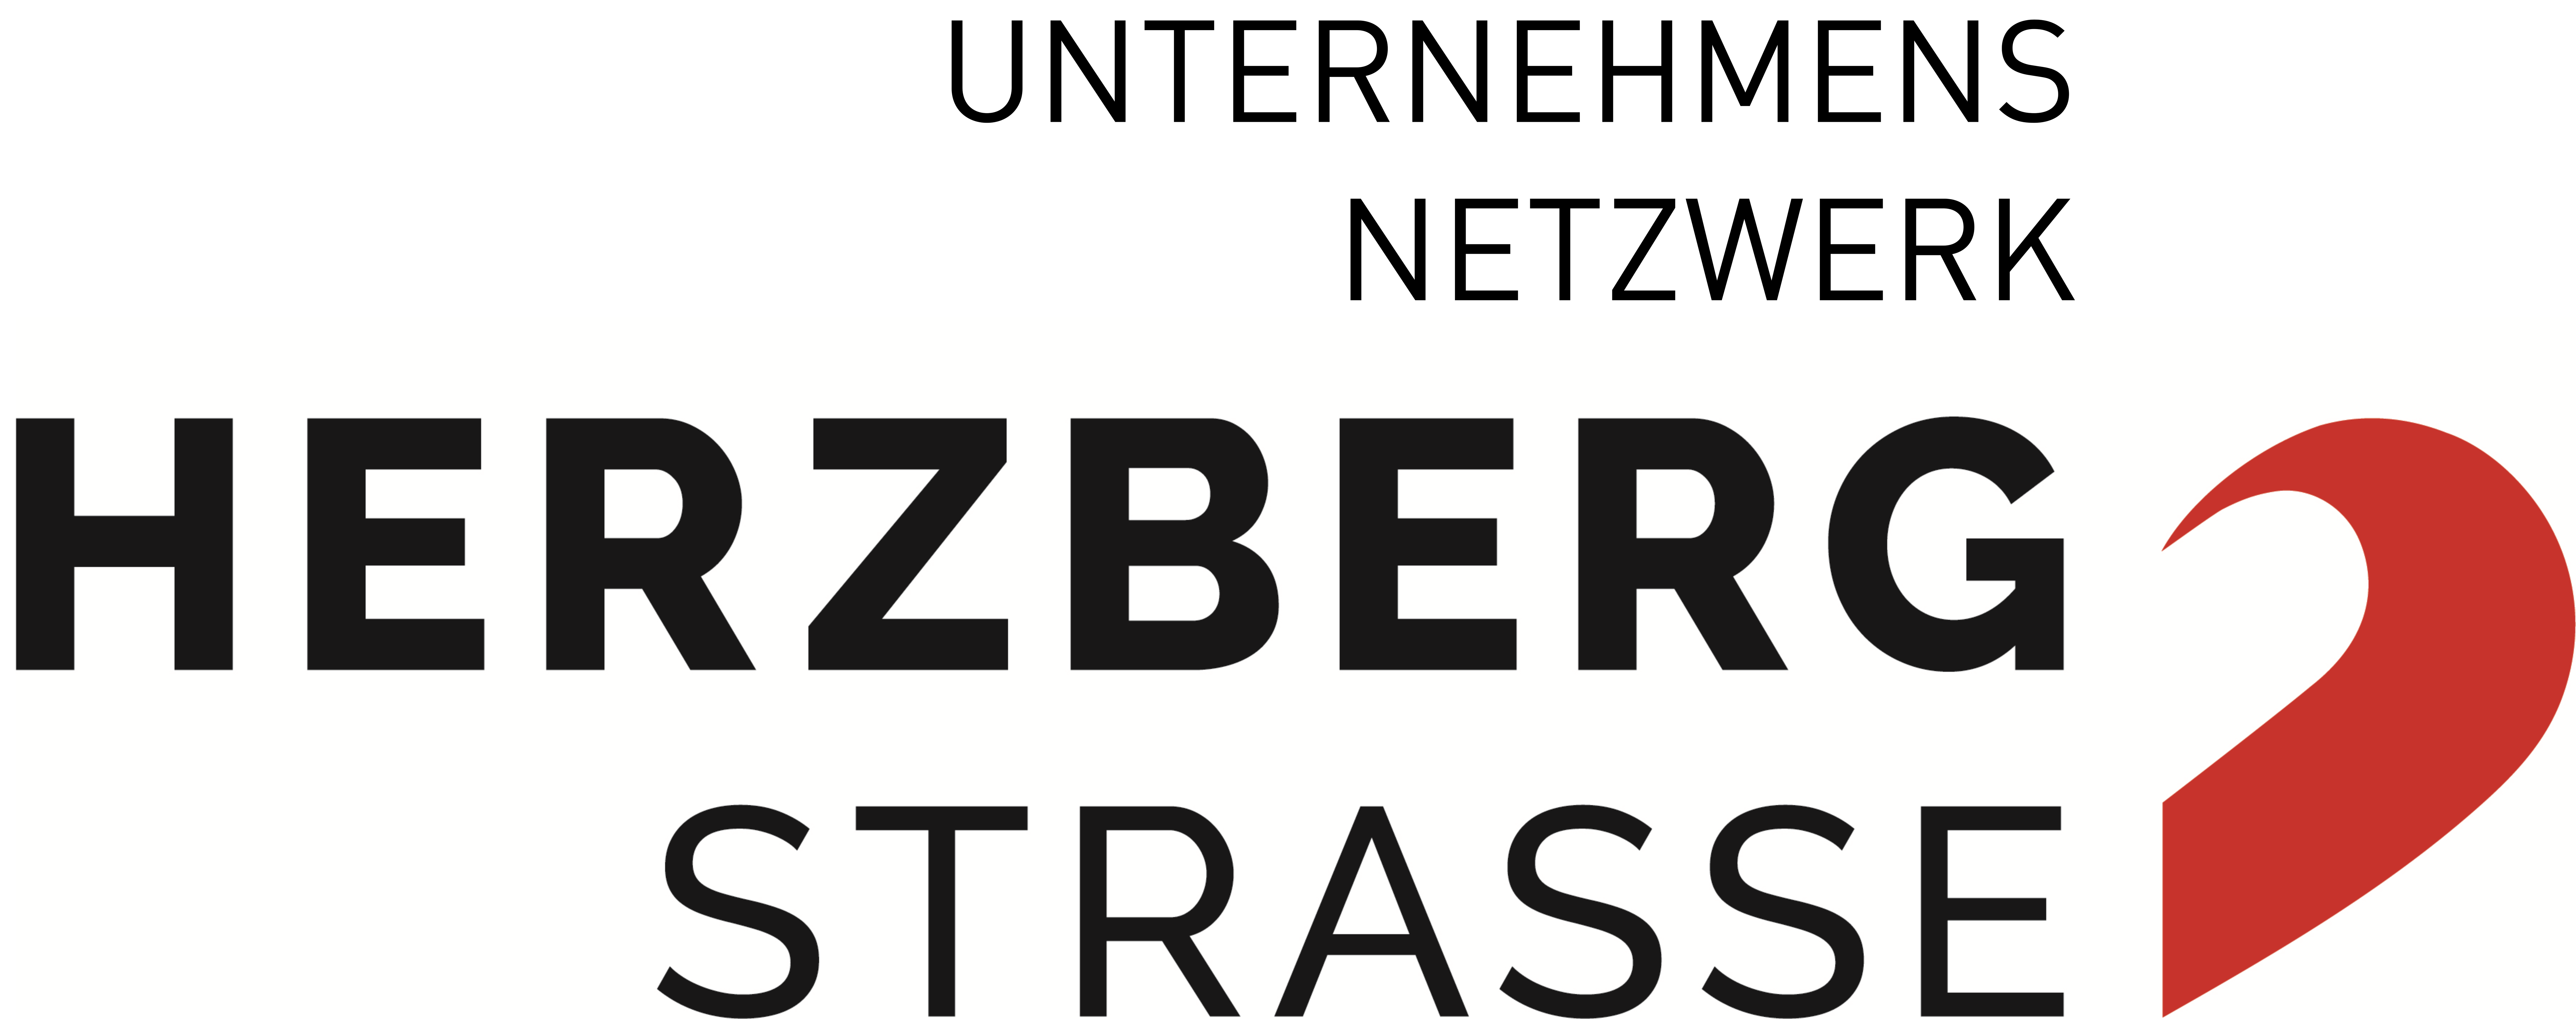 Logo Unternehmensnetzwerk Herzbergstraße